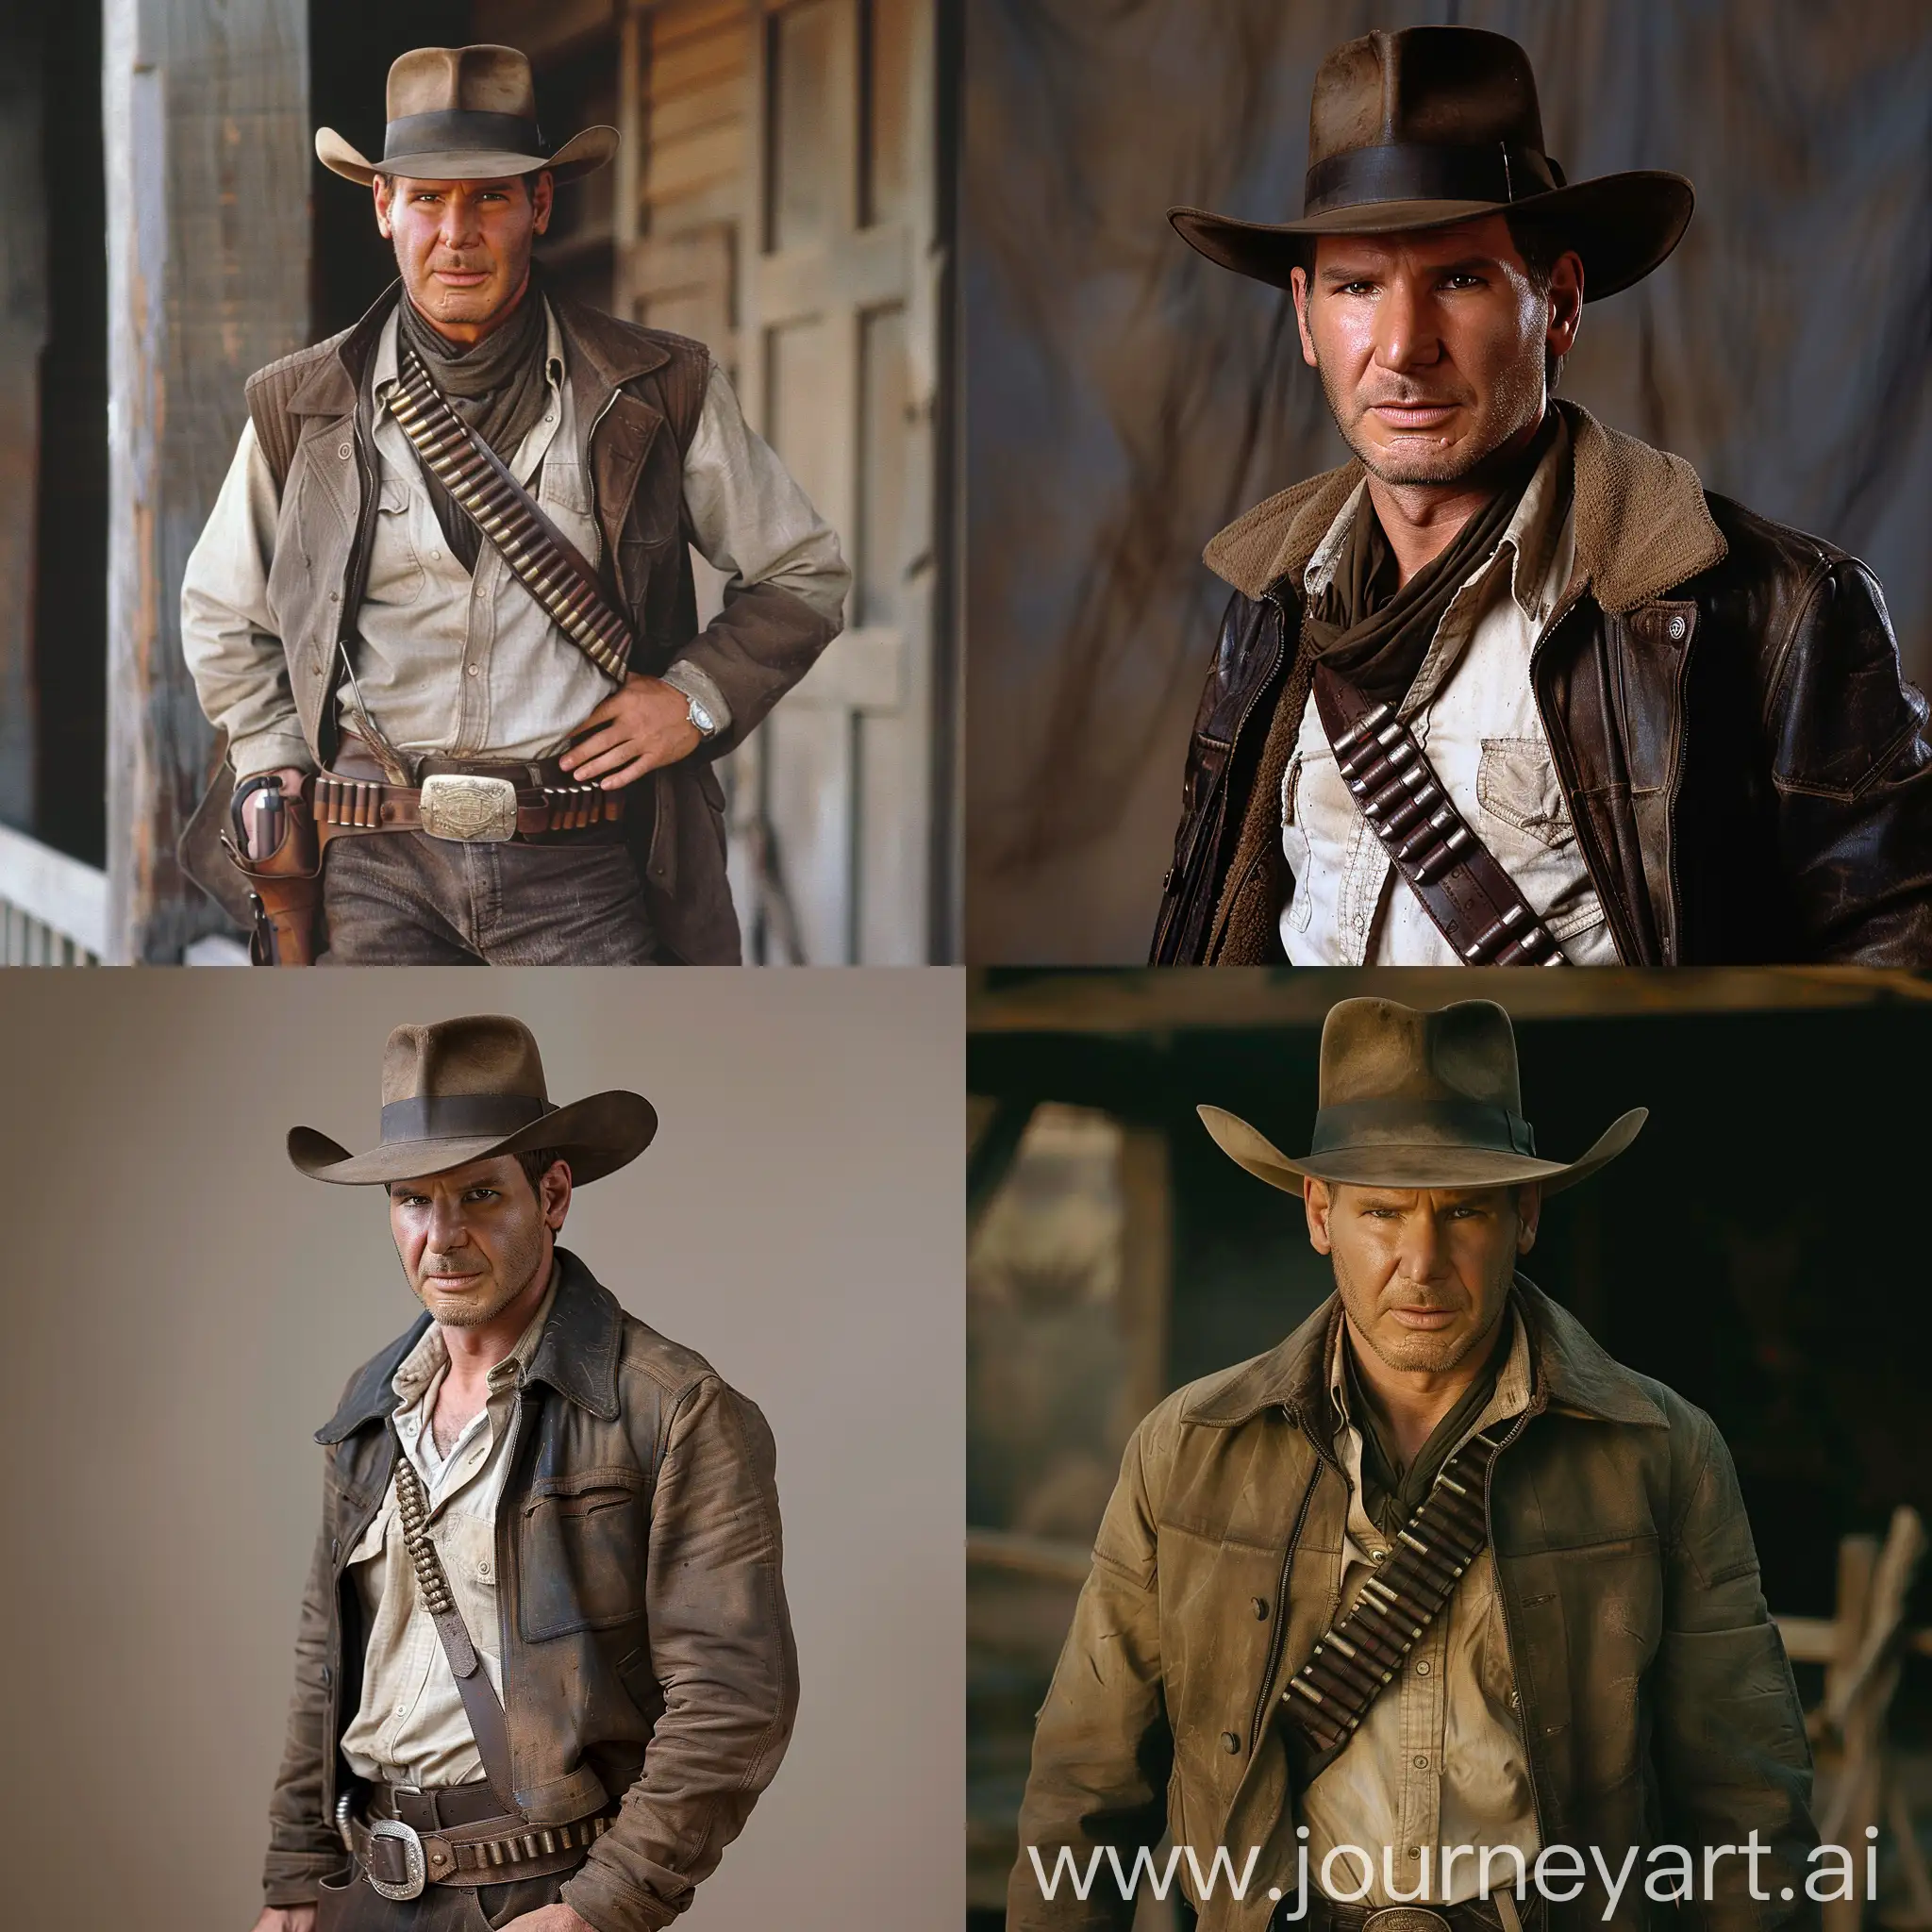 Indiana-Jones-Cowboy-Adventure-in-19th-Century-Setting